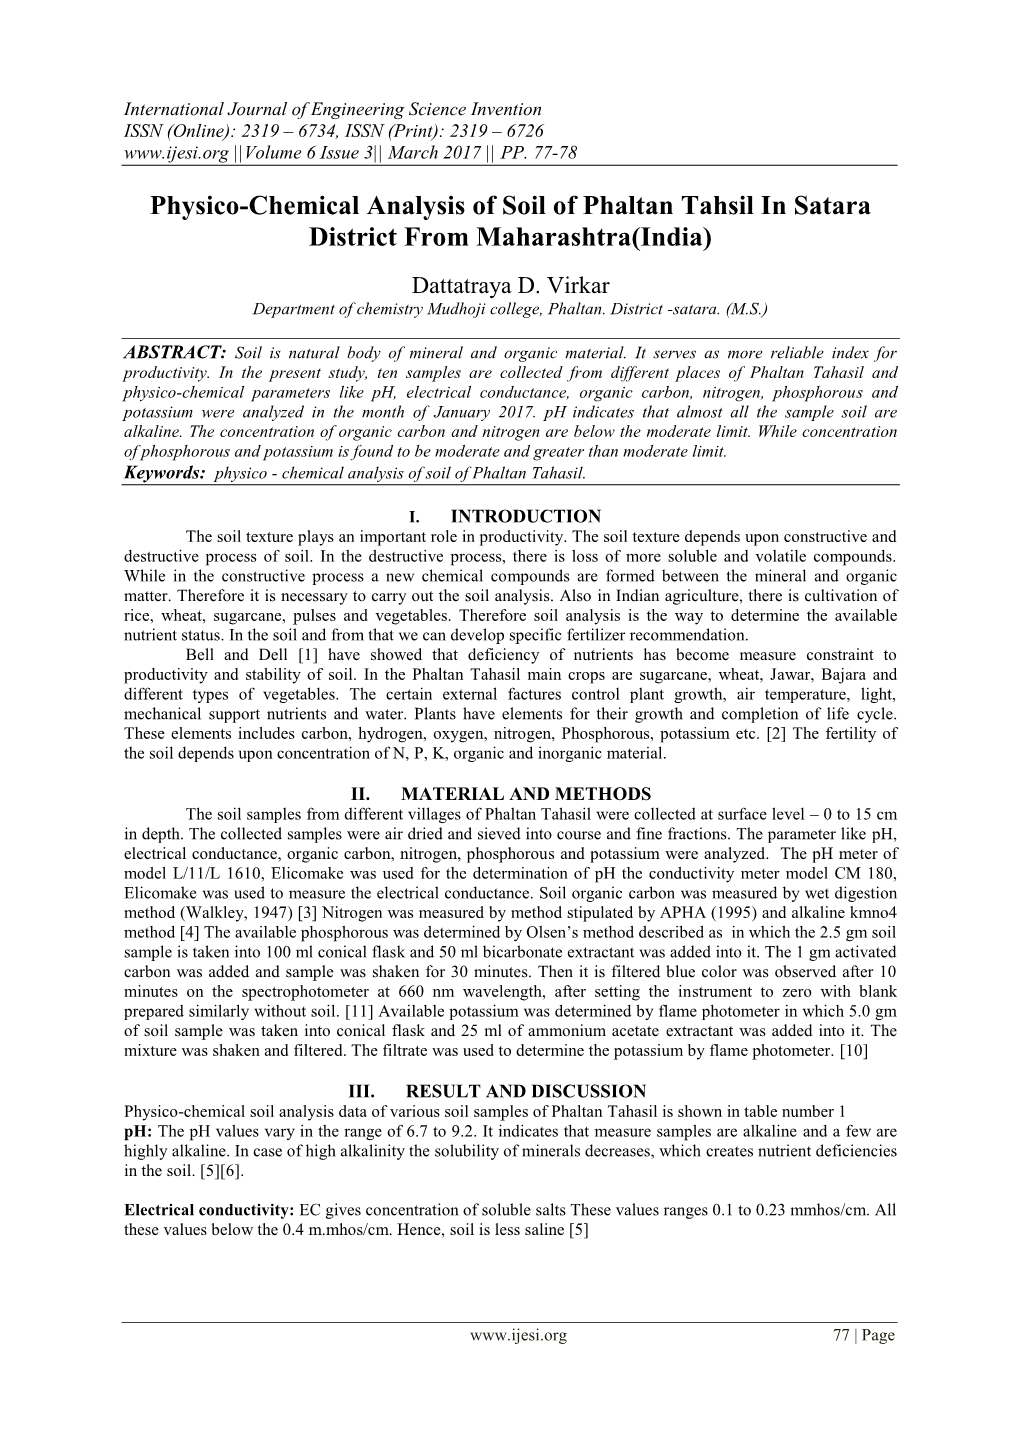 Physico-Chemical Analysis of Soil of Phaltan Tahsil in Satara District from Maharashtra(India)